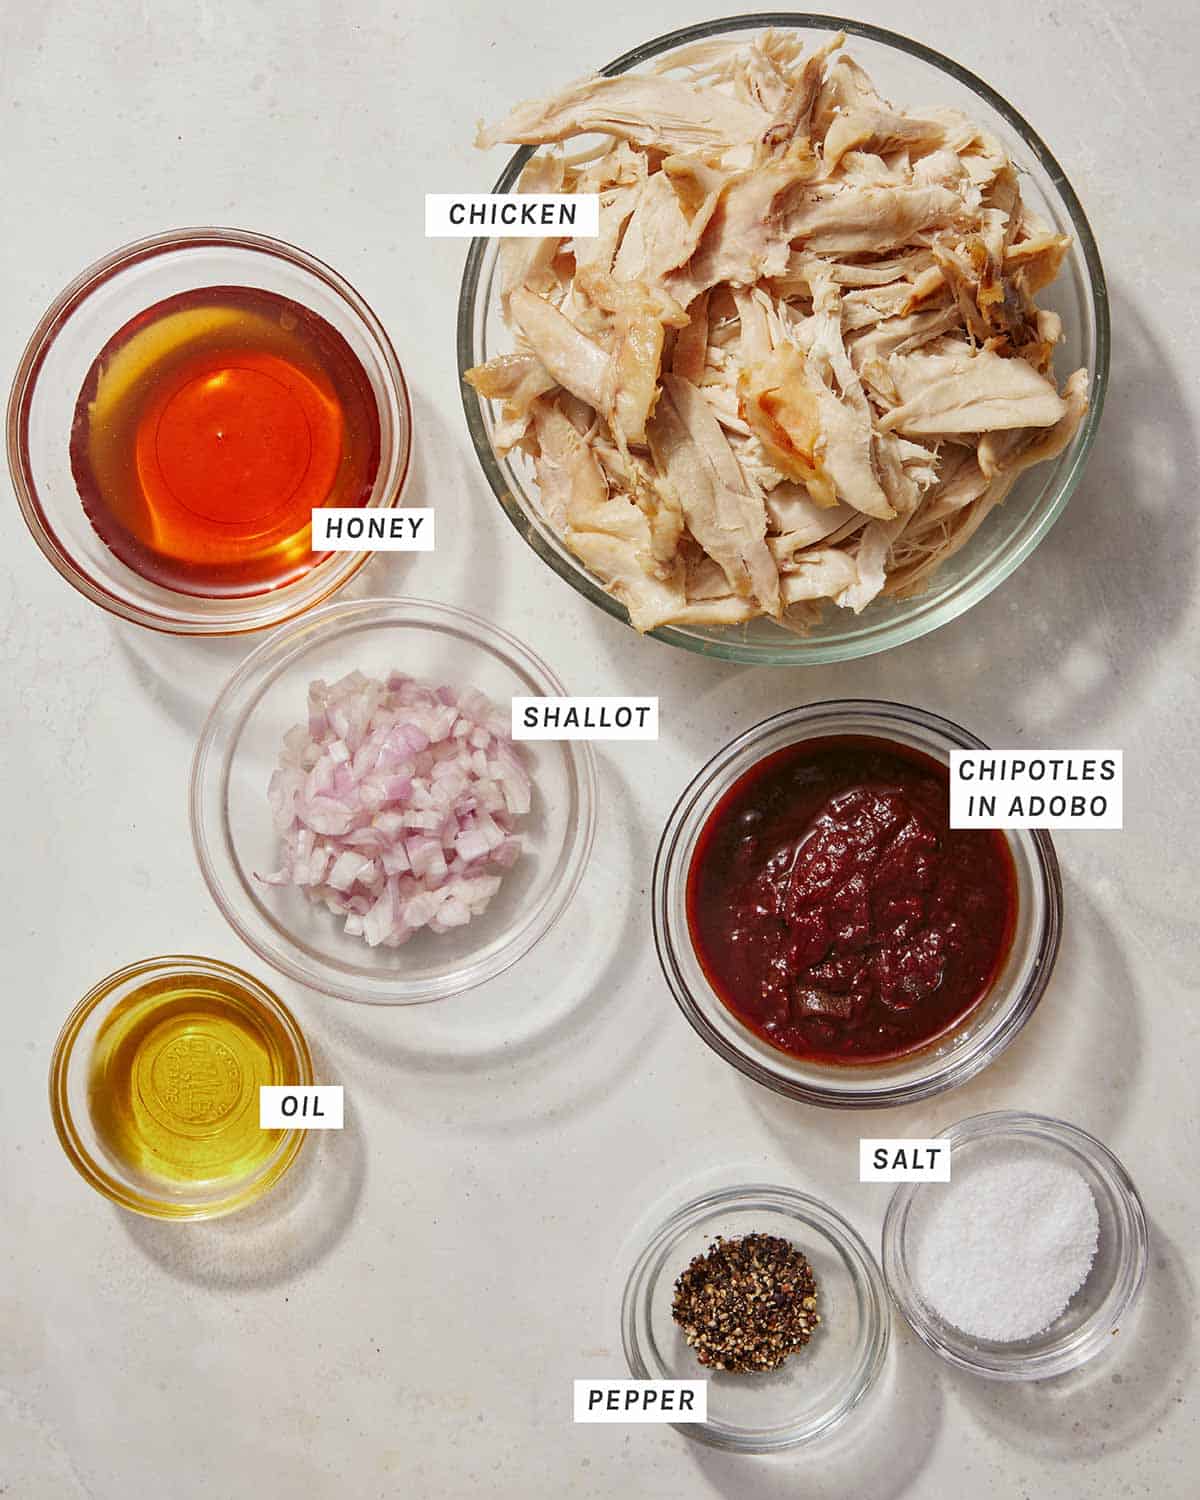 Chipotle chicken ingredients on a kitchen counter. 